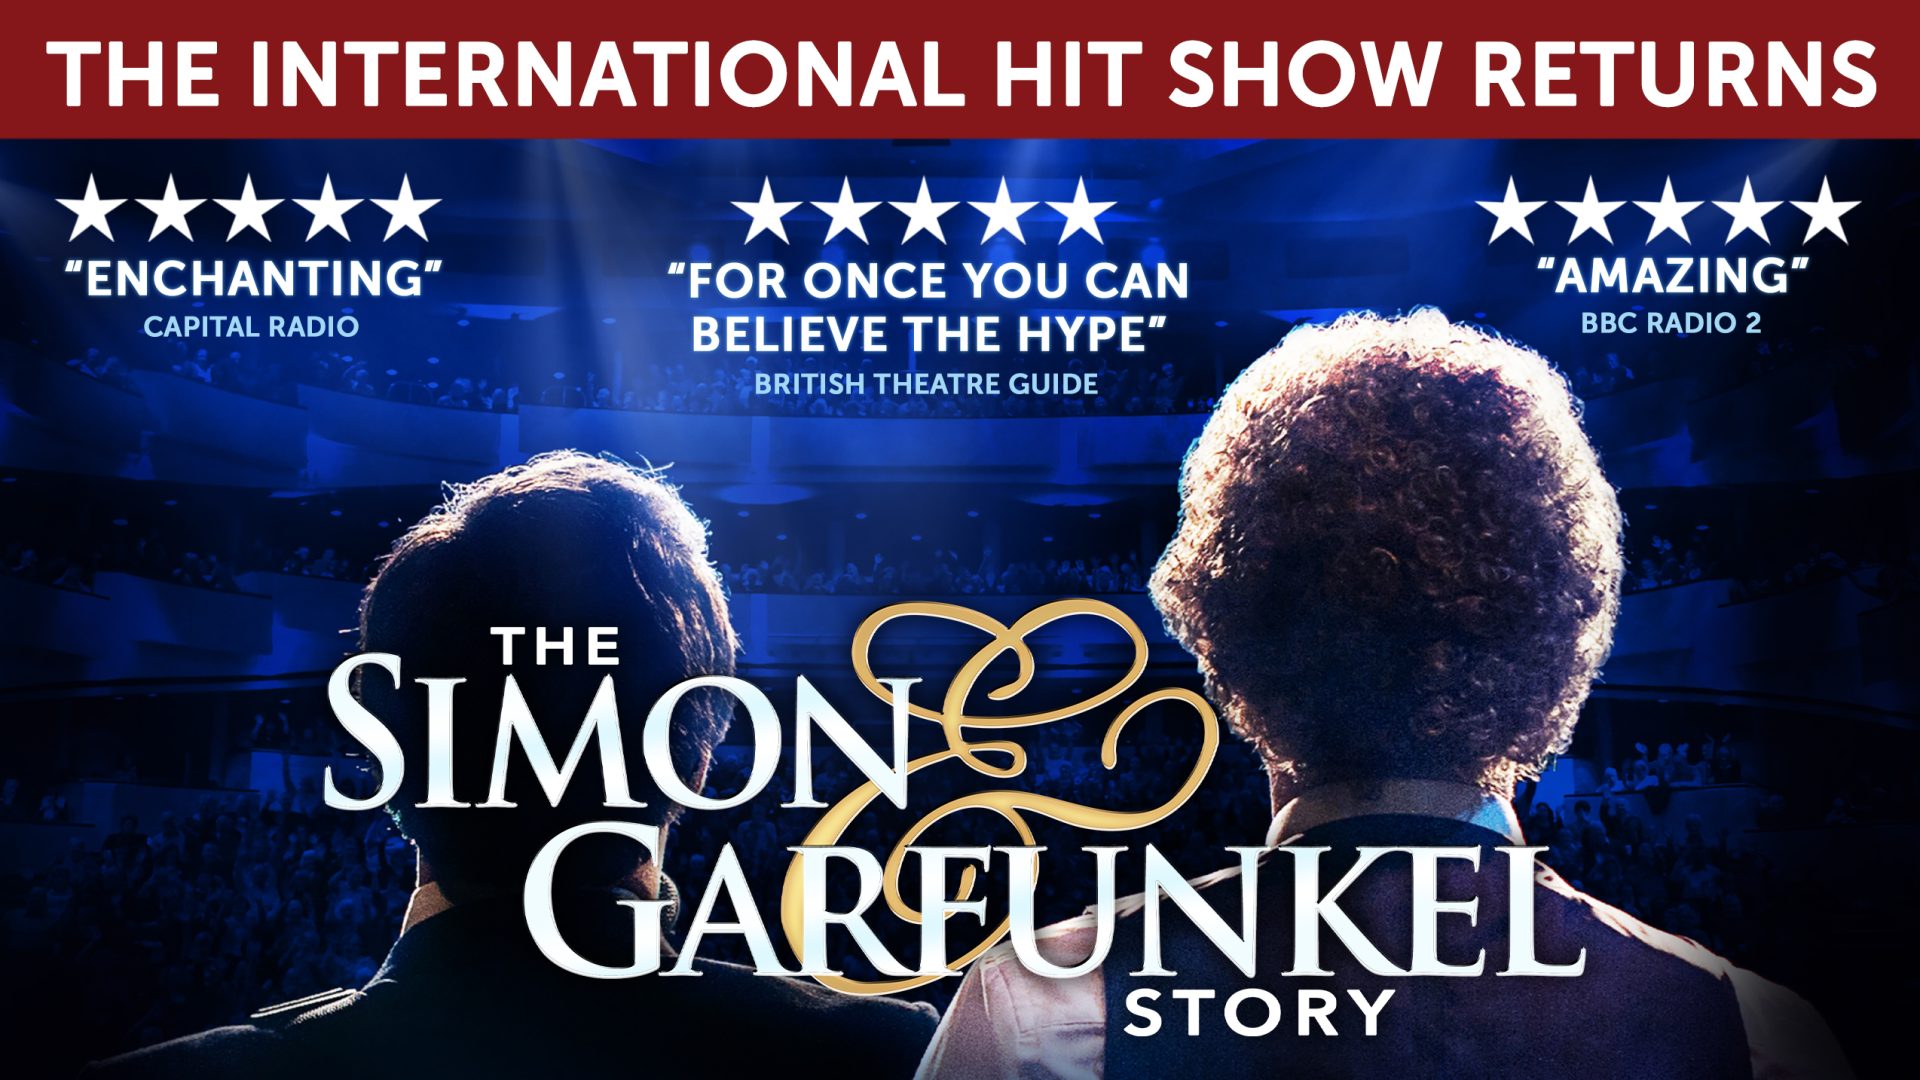 The Simon &#038; Garfunkel Story